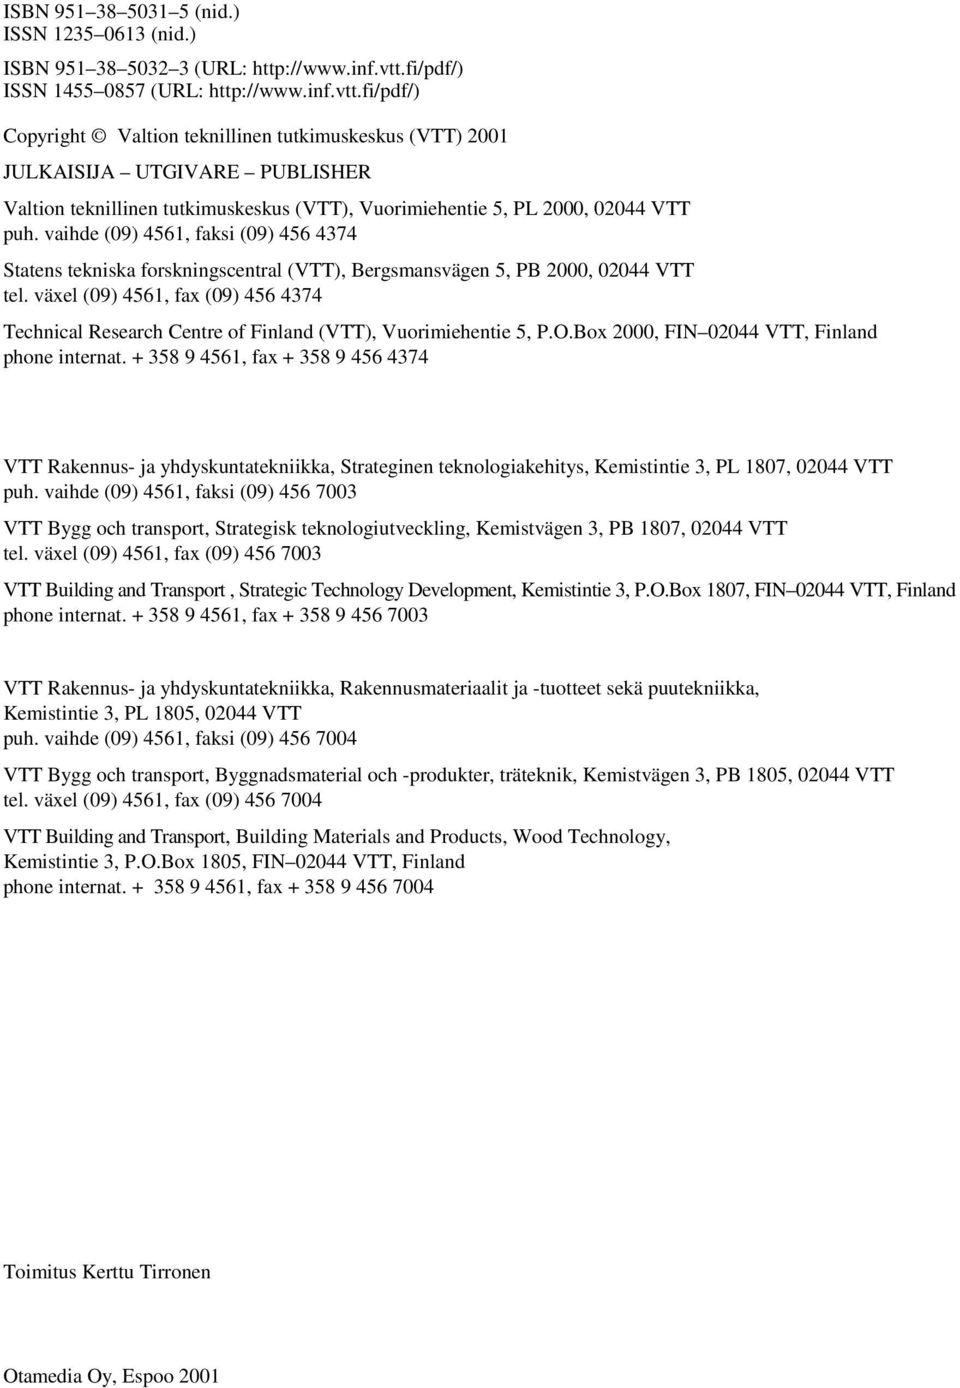 fi/pdf/) Copyright Valtion teknillinen tutkimuskeskus (VTT) 2001 JULKAISIJA UTGIVARE PUBLISHER Valtion teknillinen tutkimuskeskus (VTT), Vuorimiehentie 5, PL 2000, 02044 VTT puh.